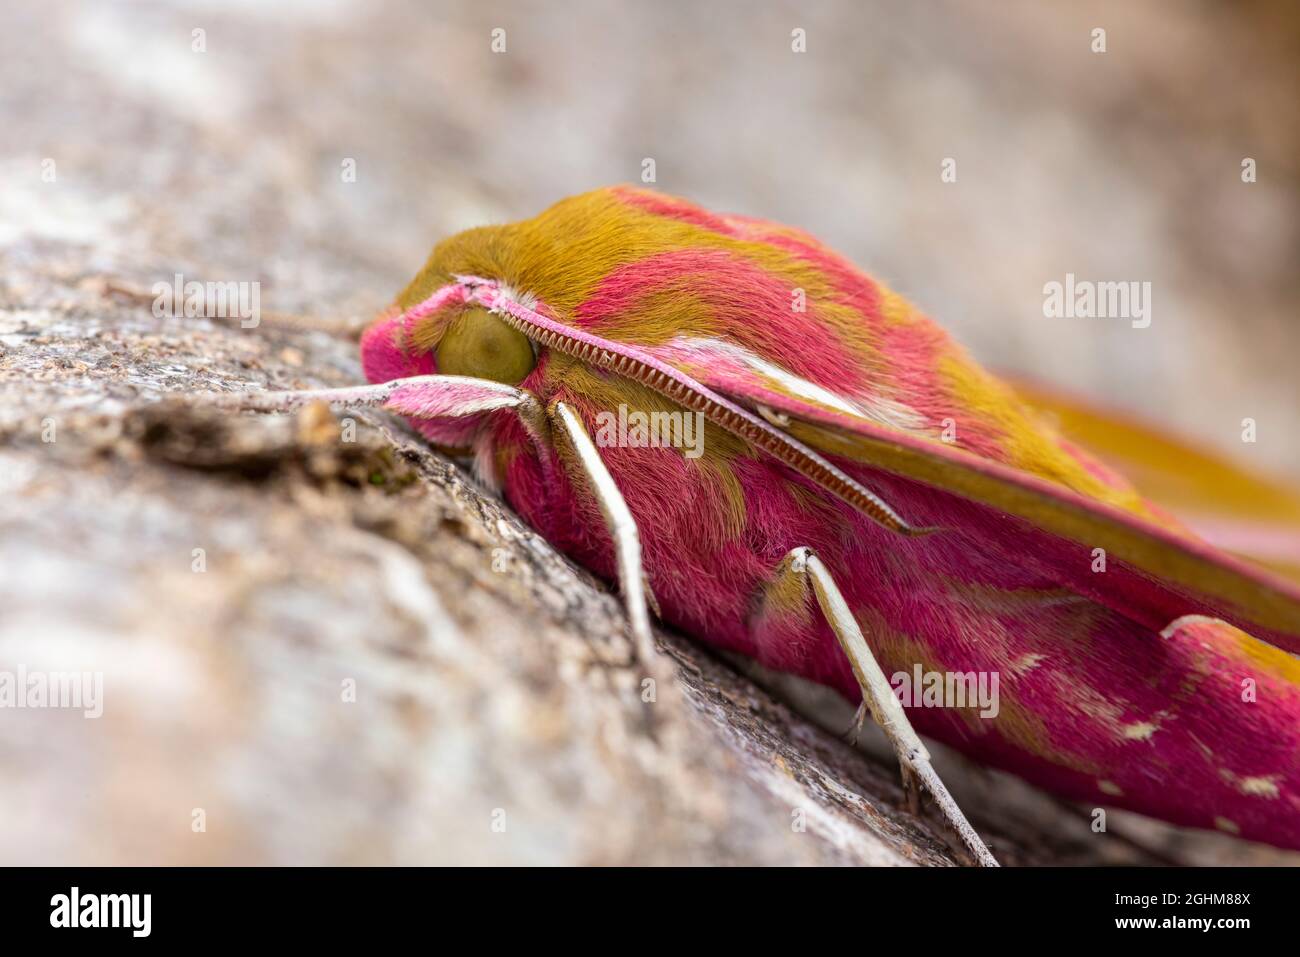 An Elephant Hawk-moth (Deilephila elpenor) resting on tree bark Stock Photo